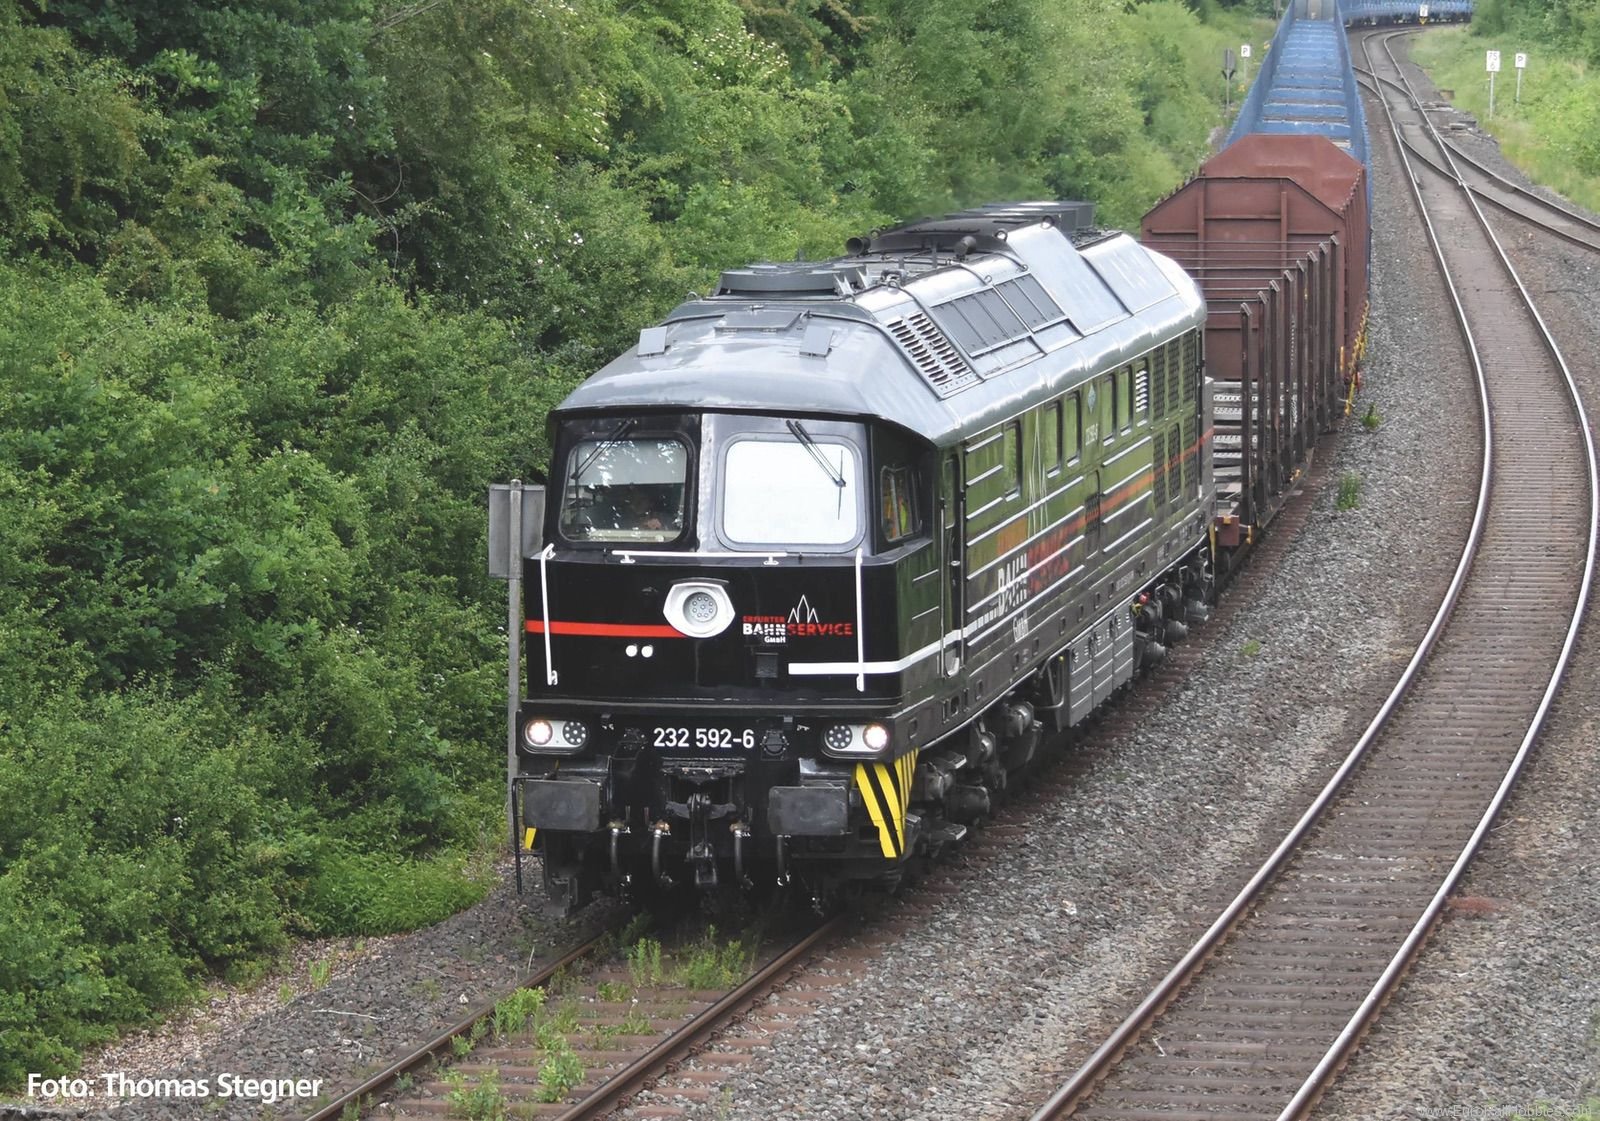 Piko 37584 G Class 232 EBS VI Diesel Locomotive